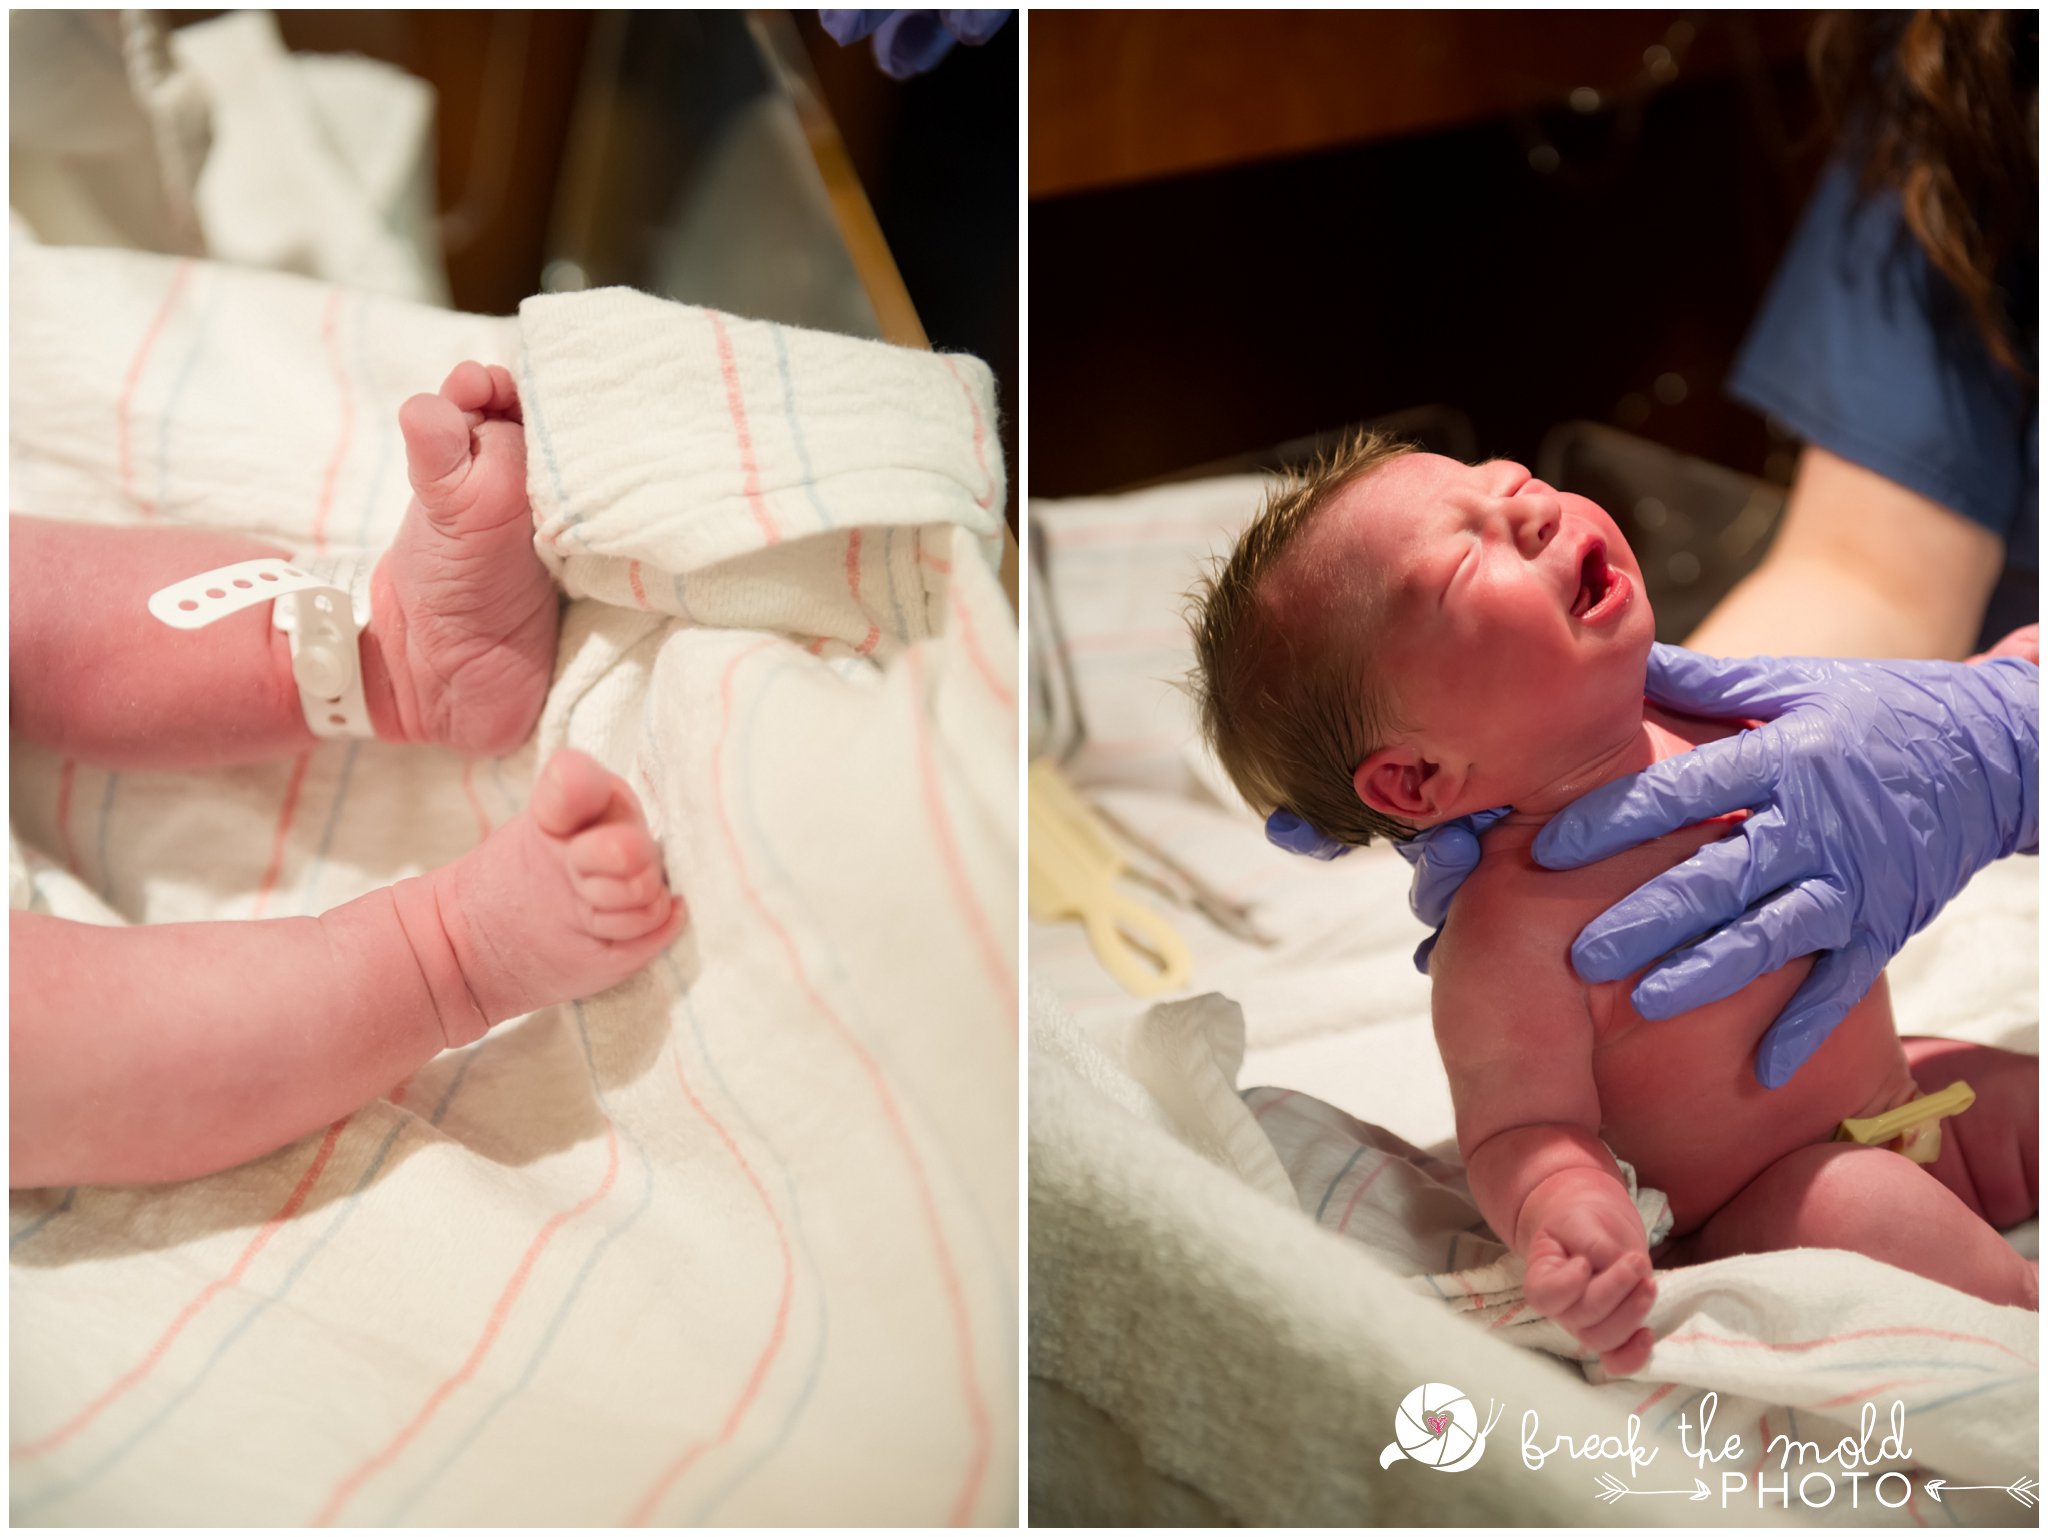 fresh-24-newborn-in-hospital-break-the-mold-photo-baby-girl-sweet-in-room-photos (4).jpg